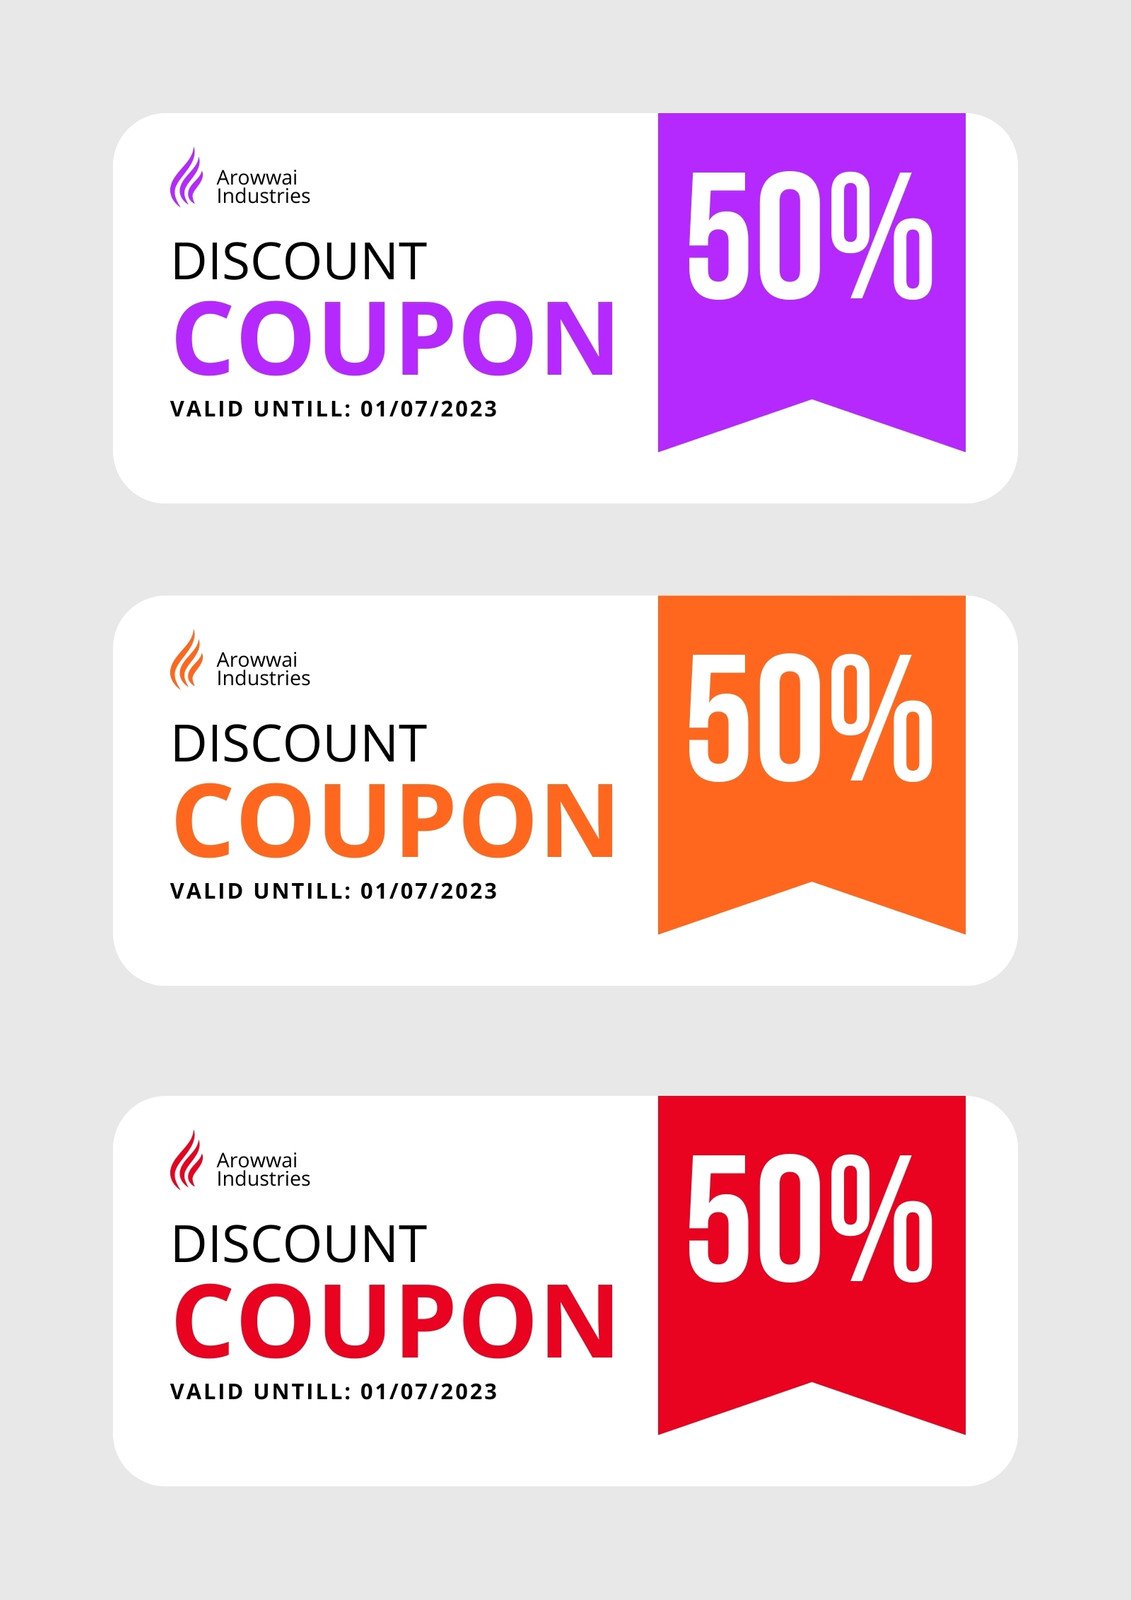 Free, printable, customizable coupon templates